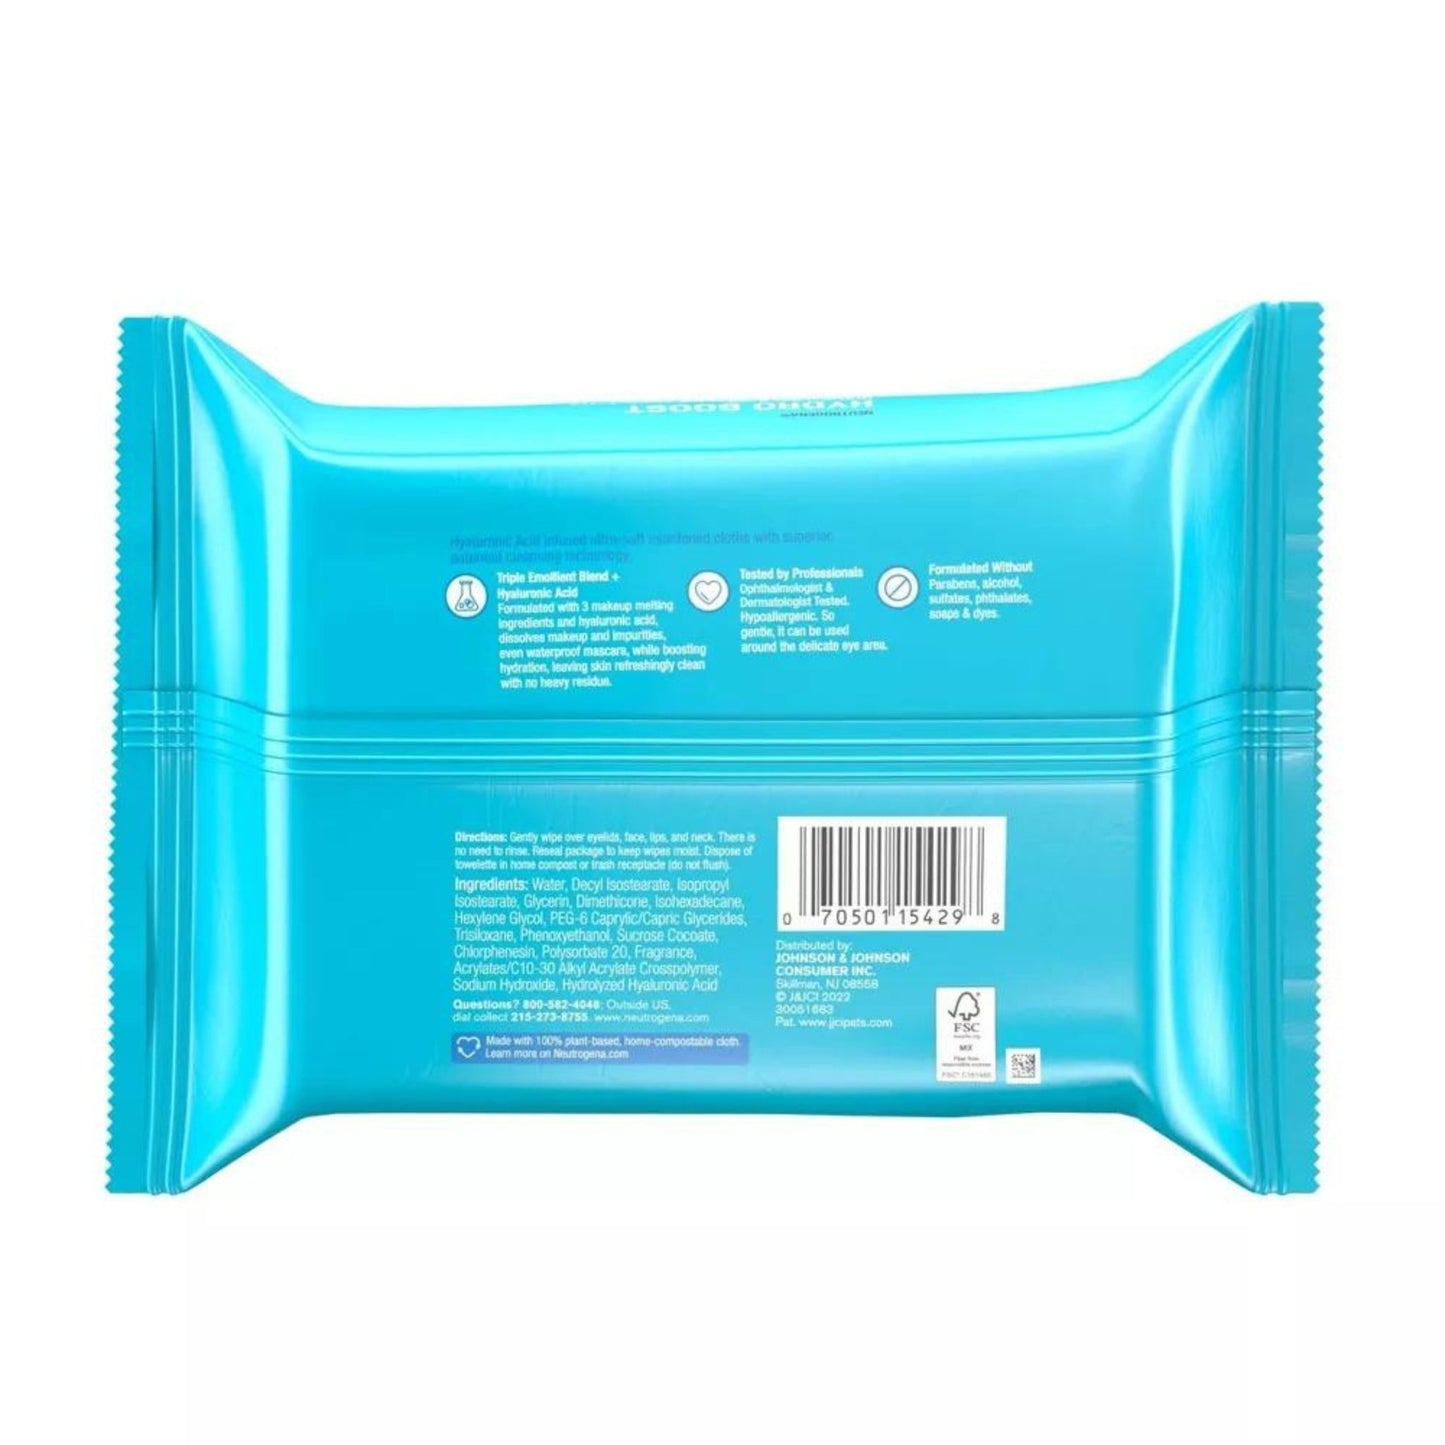 Neutrogena Hydroboost Cleansing Wipes (25 wipes)